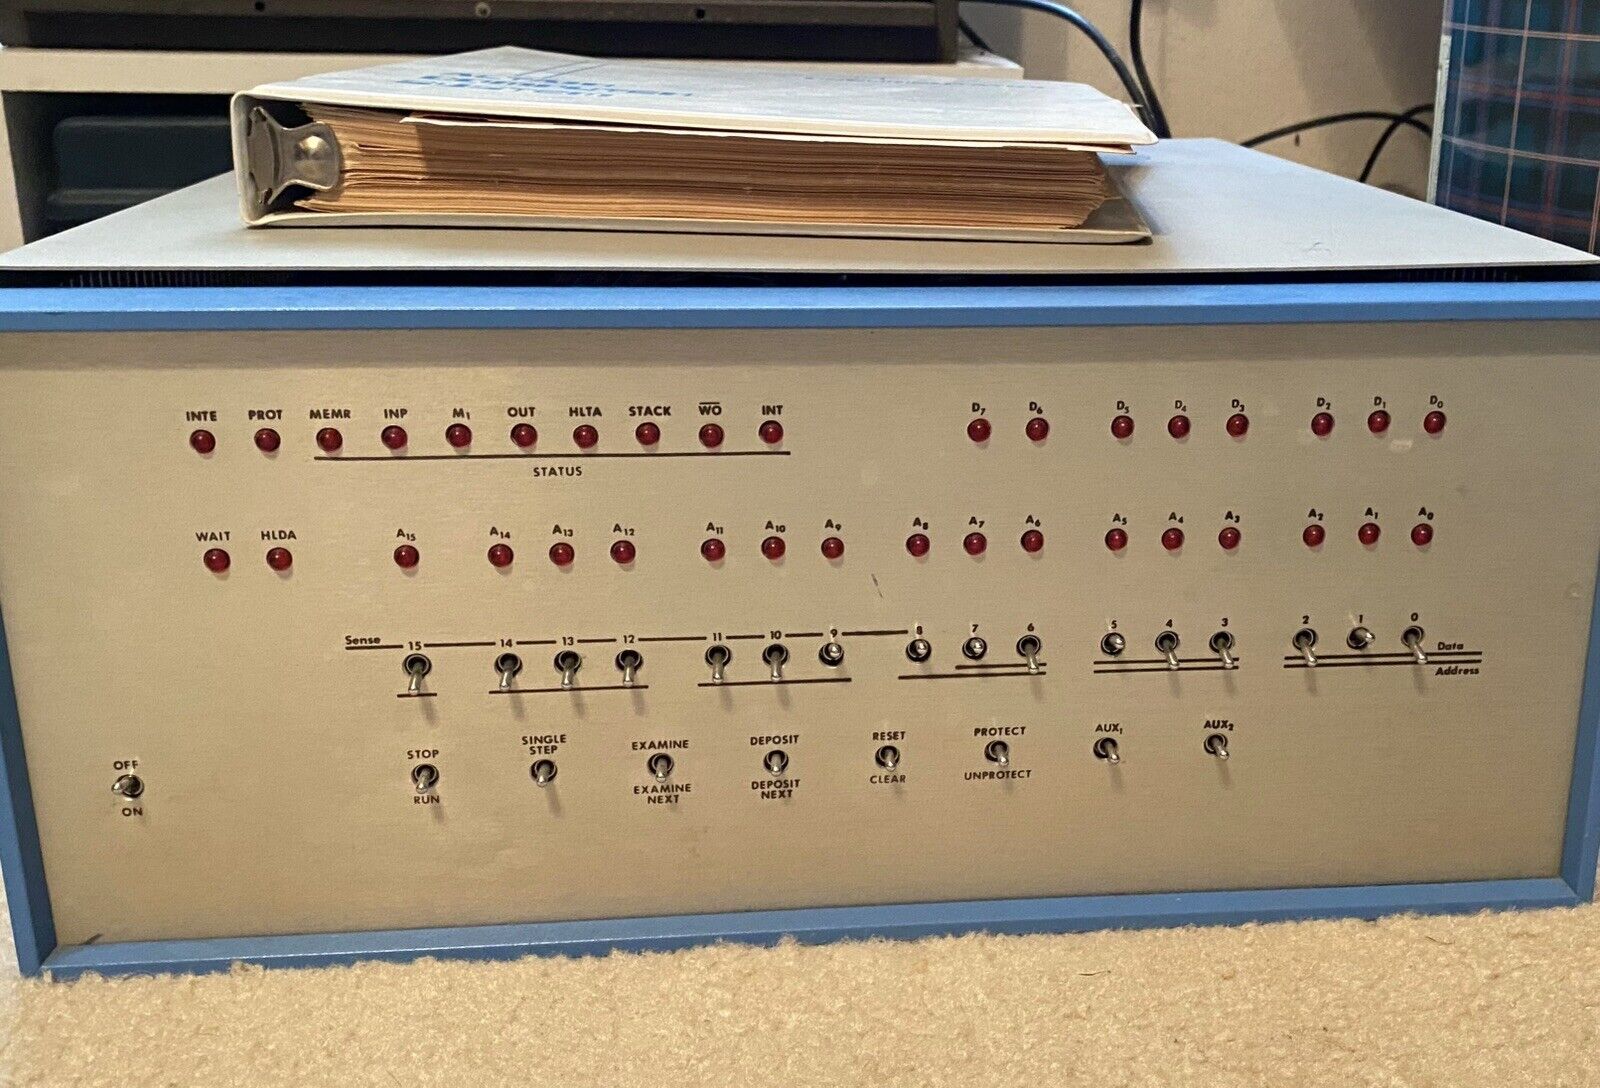 MITS Altair 8800 Vintage Computer